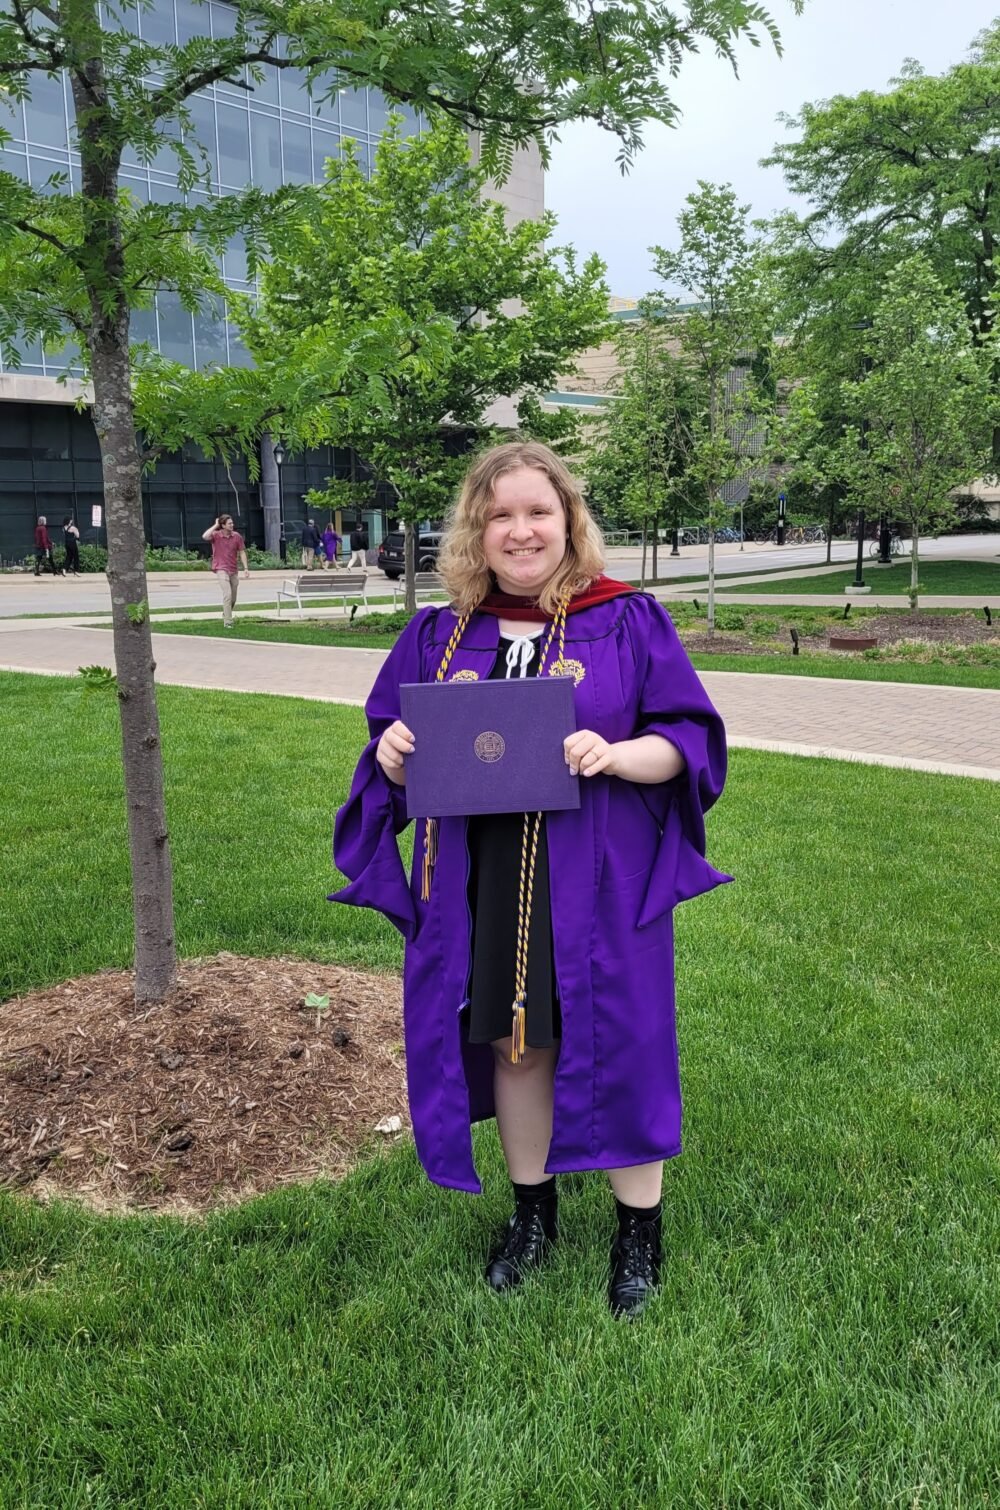 holding a diploma in purple regalia